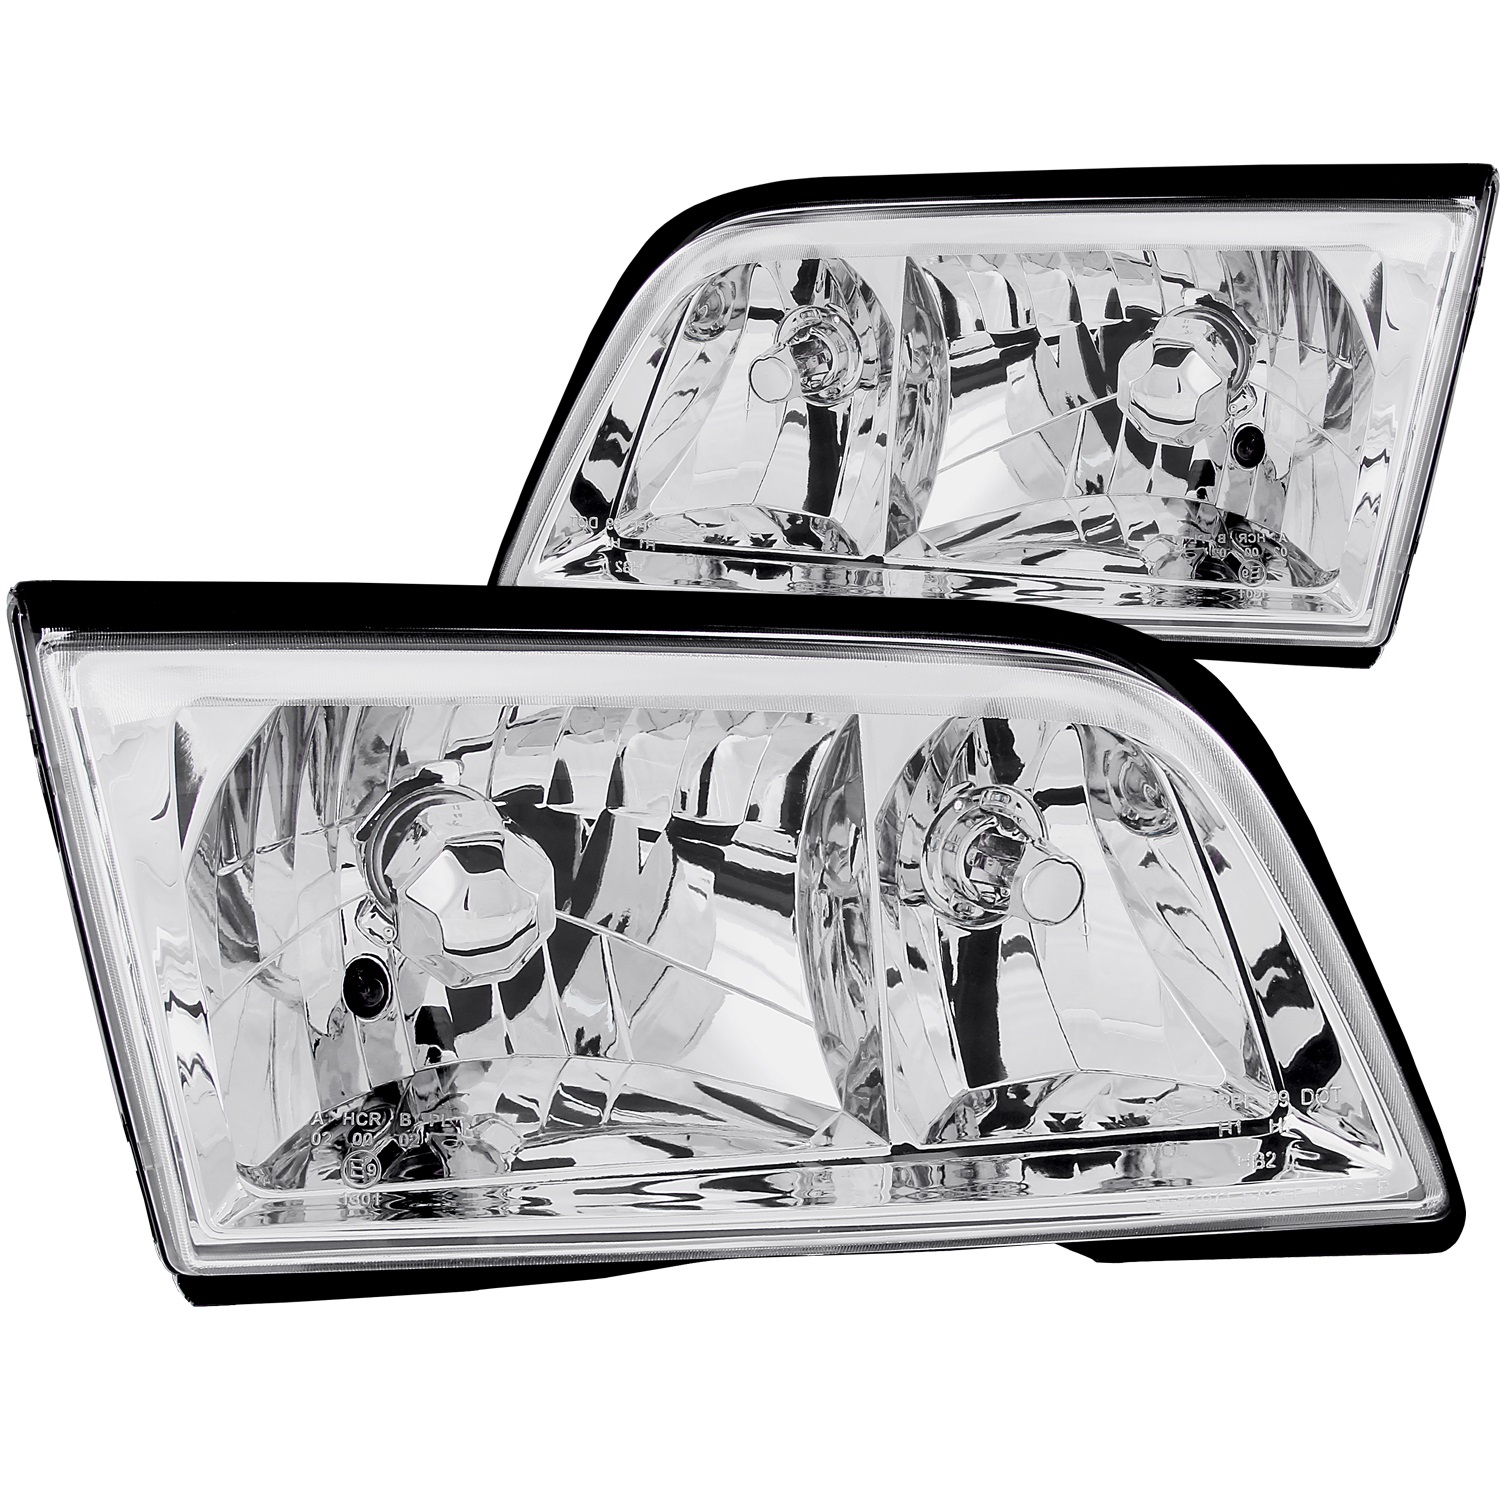 Anzo USA Anzo USA 121081 Crystal Headlight Set Fits 94-00 C220 C230 C280 C36 AMG C43 AMG